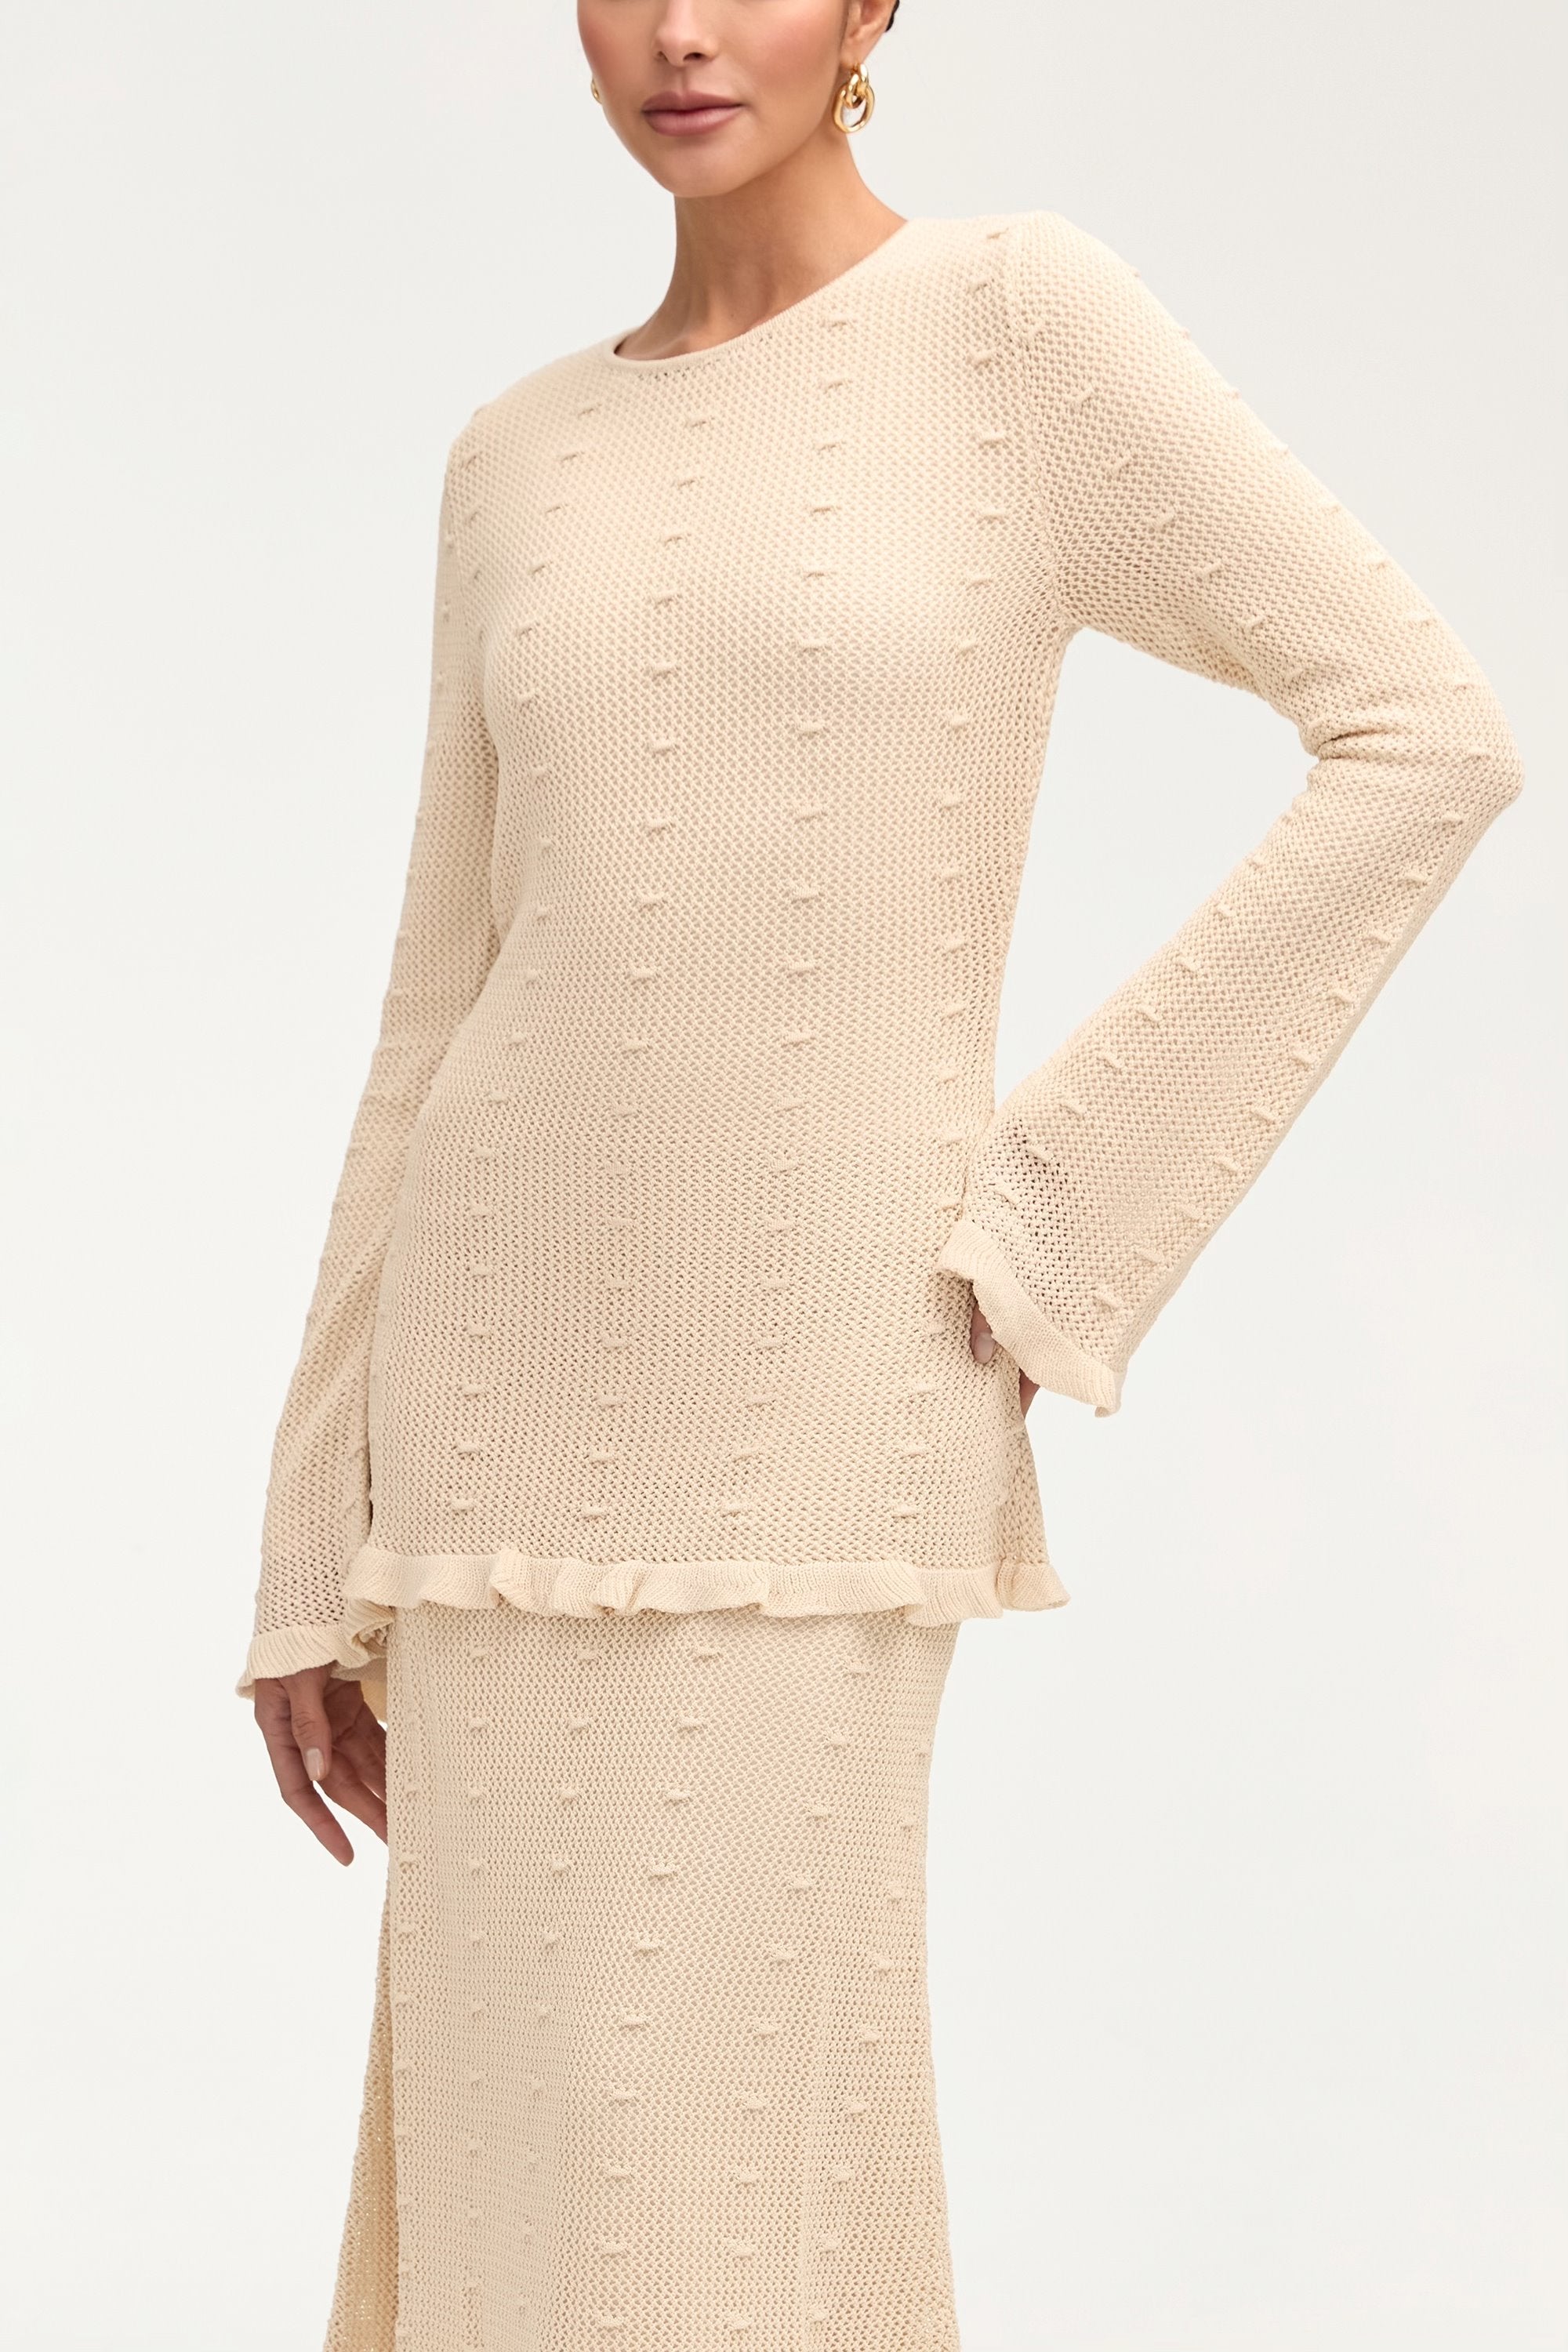 Yara Crochet Top - Off White Clothing Veiled 